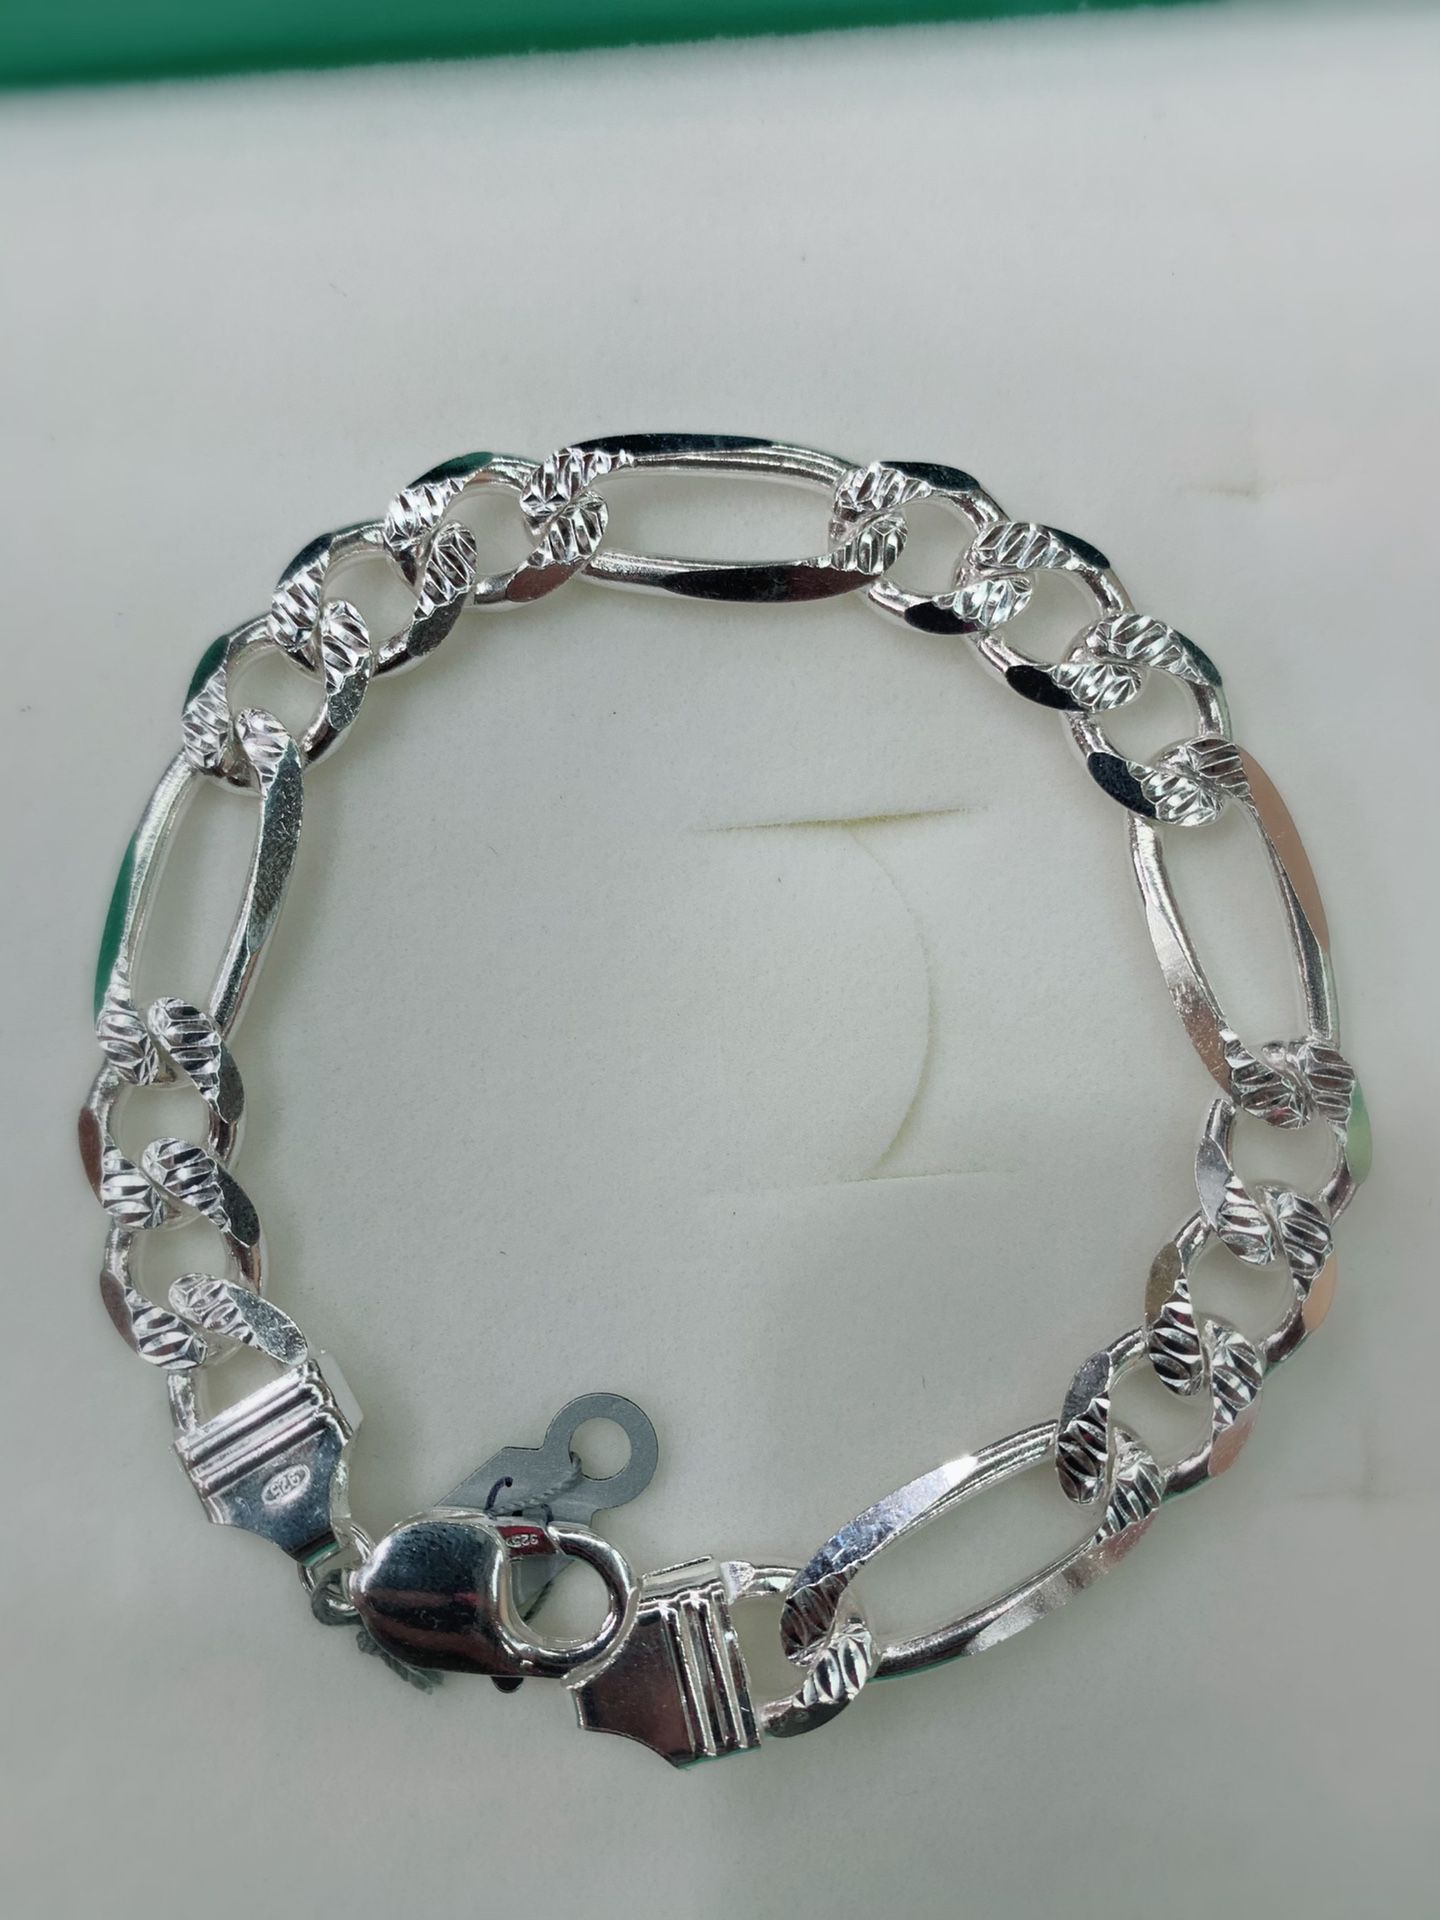 925 sterling silver bracelet 9” long